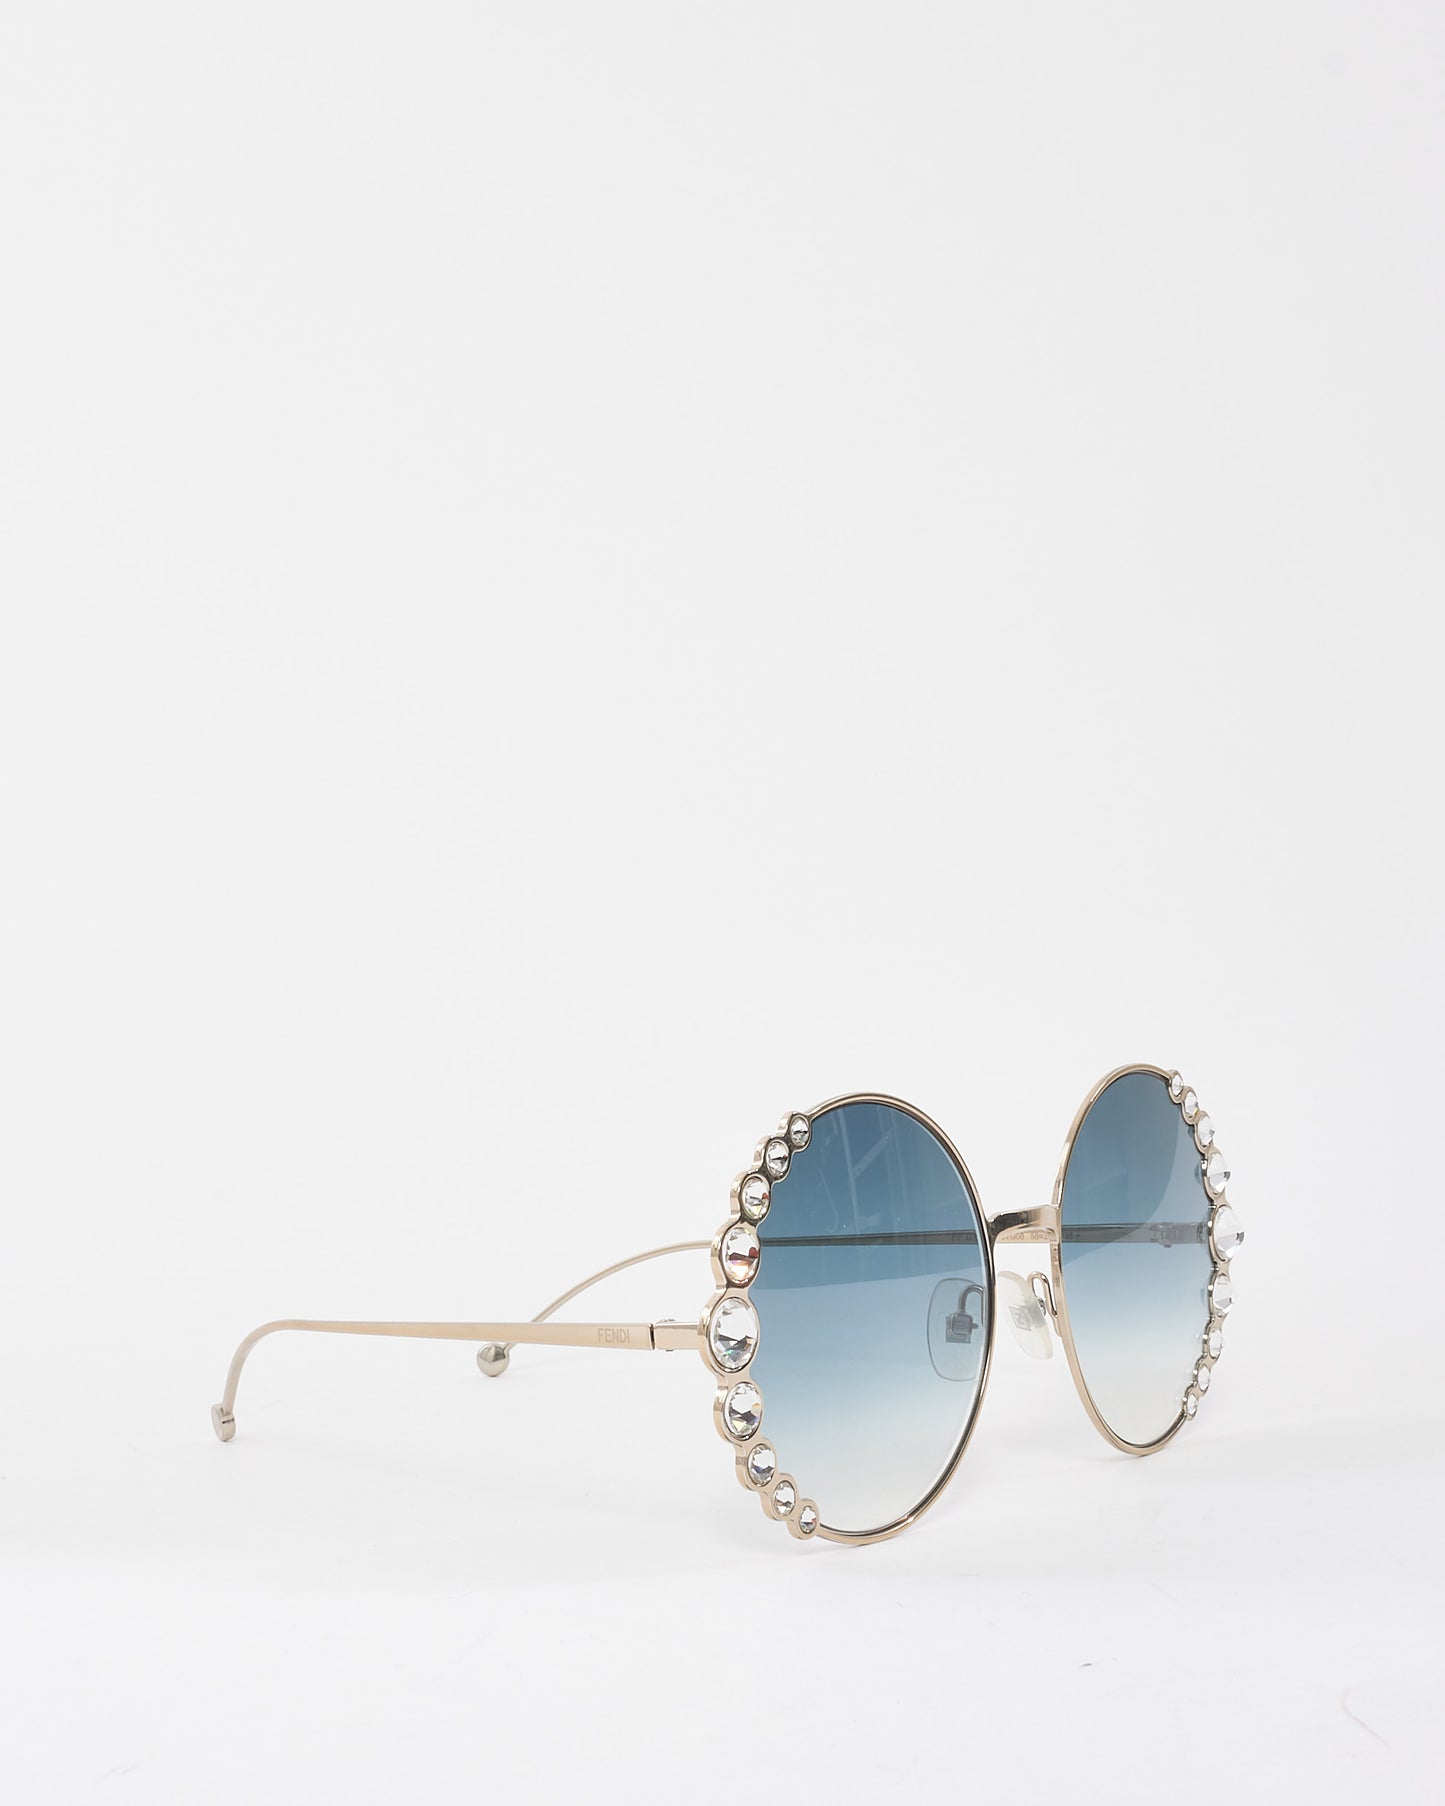 Fendi Blue/Silver Gradient Lens FF 0324/S Round Frame Sunglasses